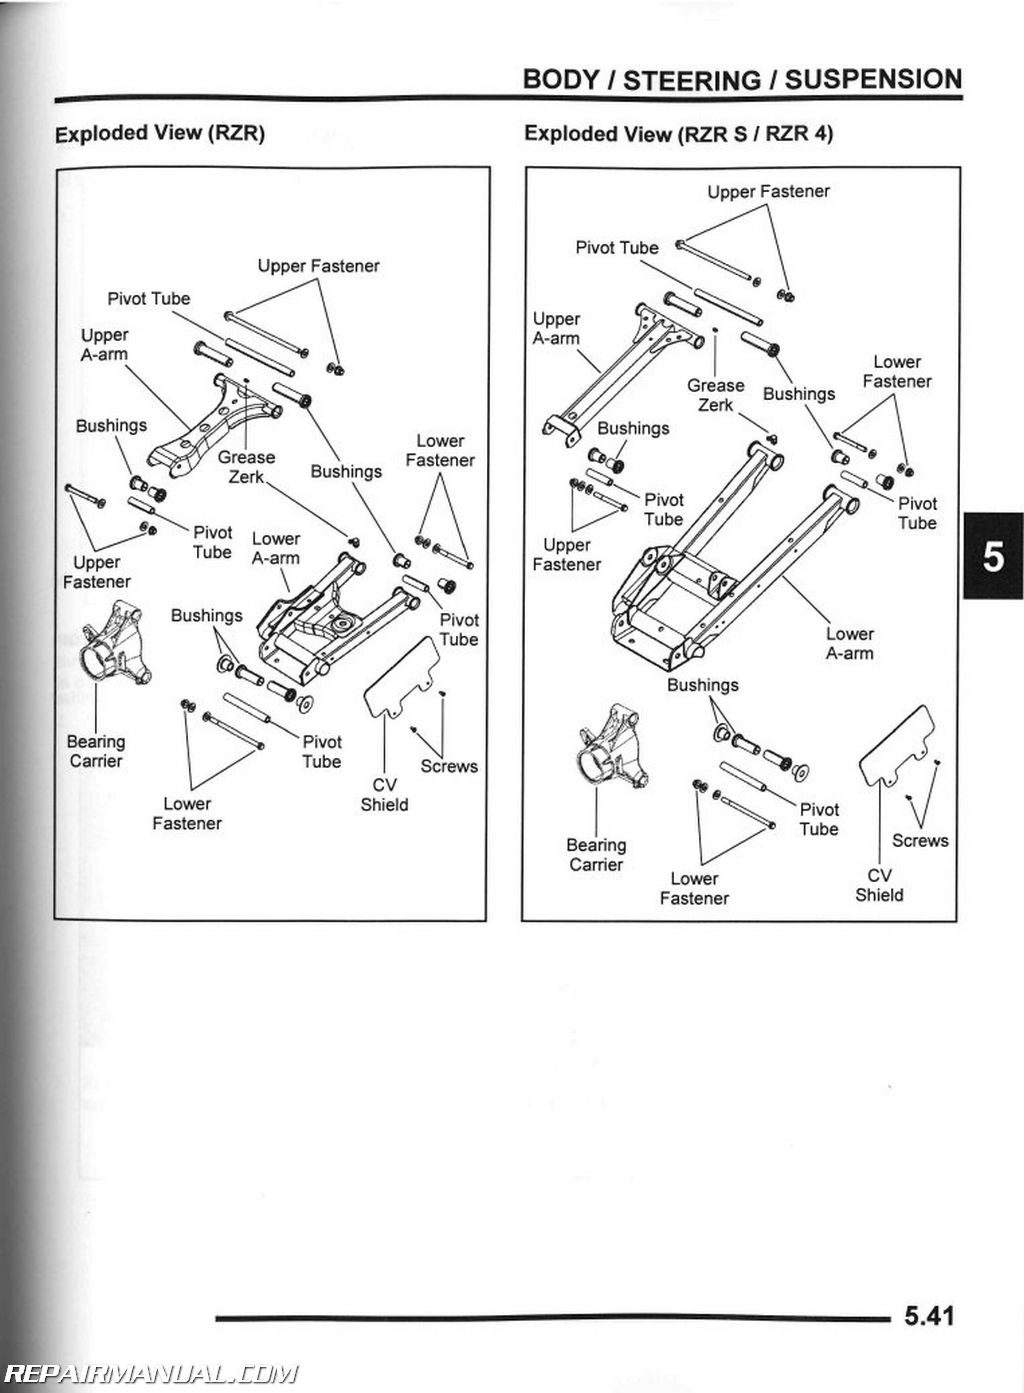 wiring diagram for a 2012 800 benneche spire